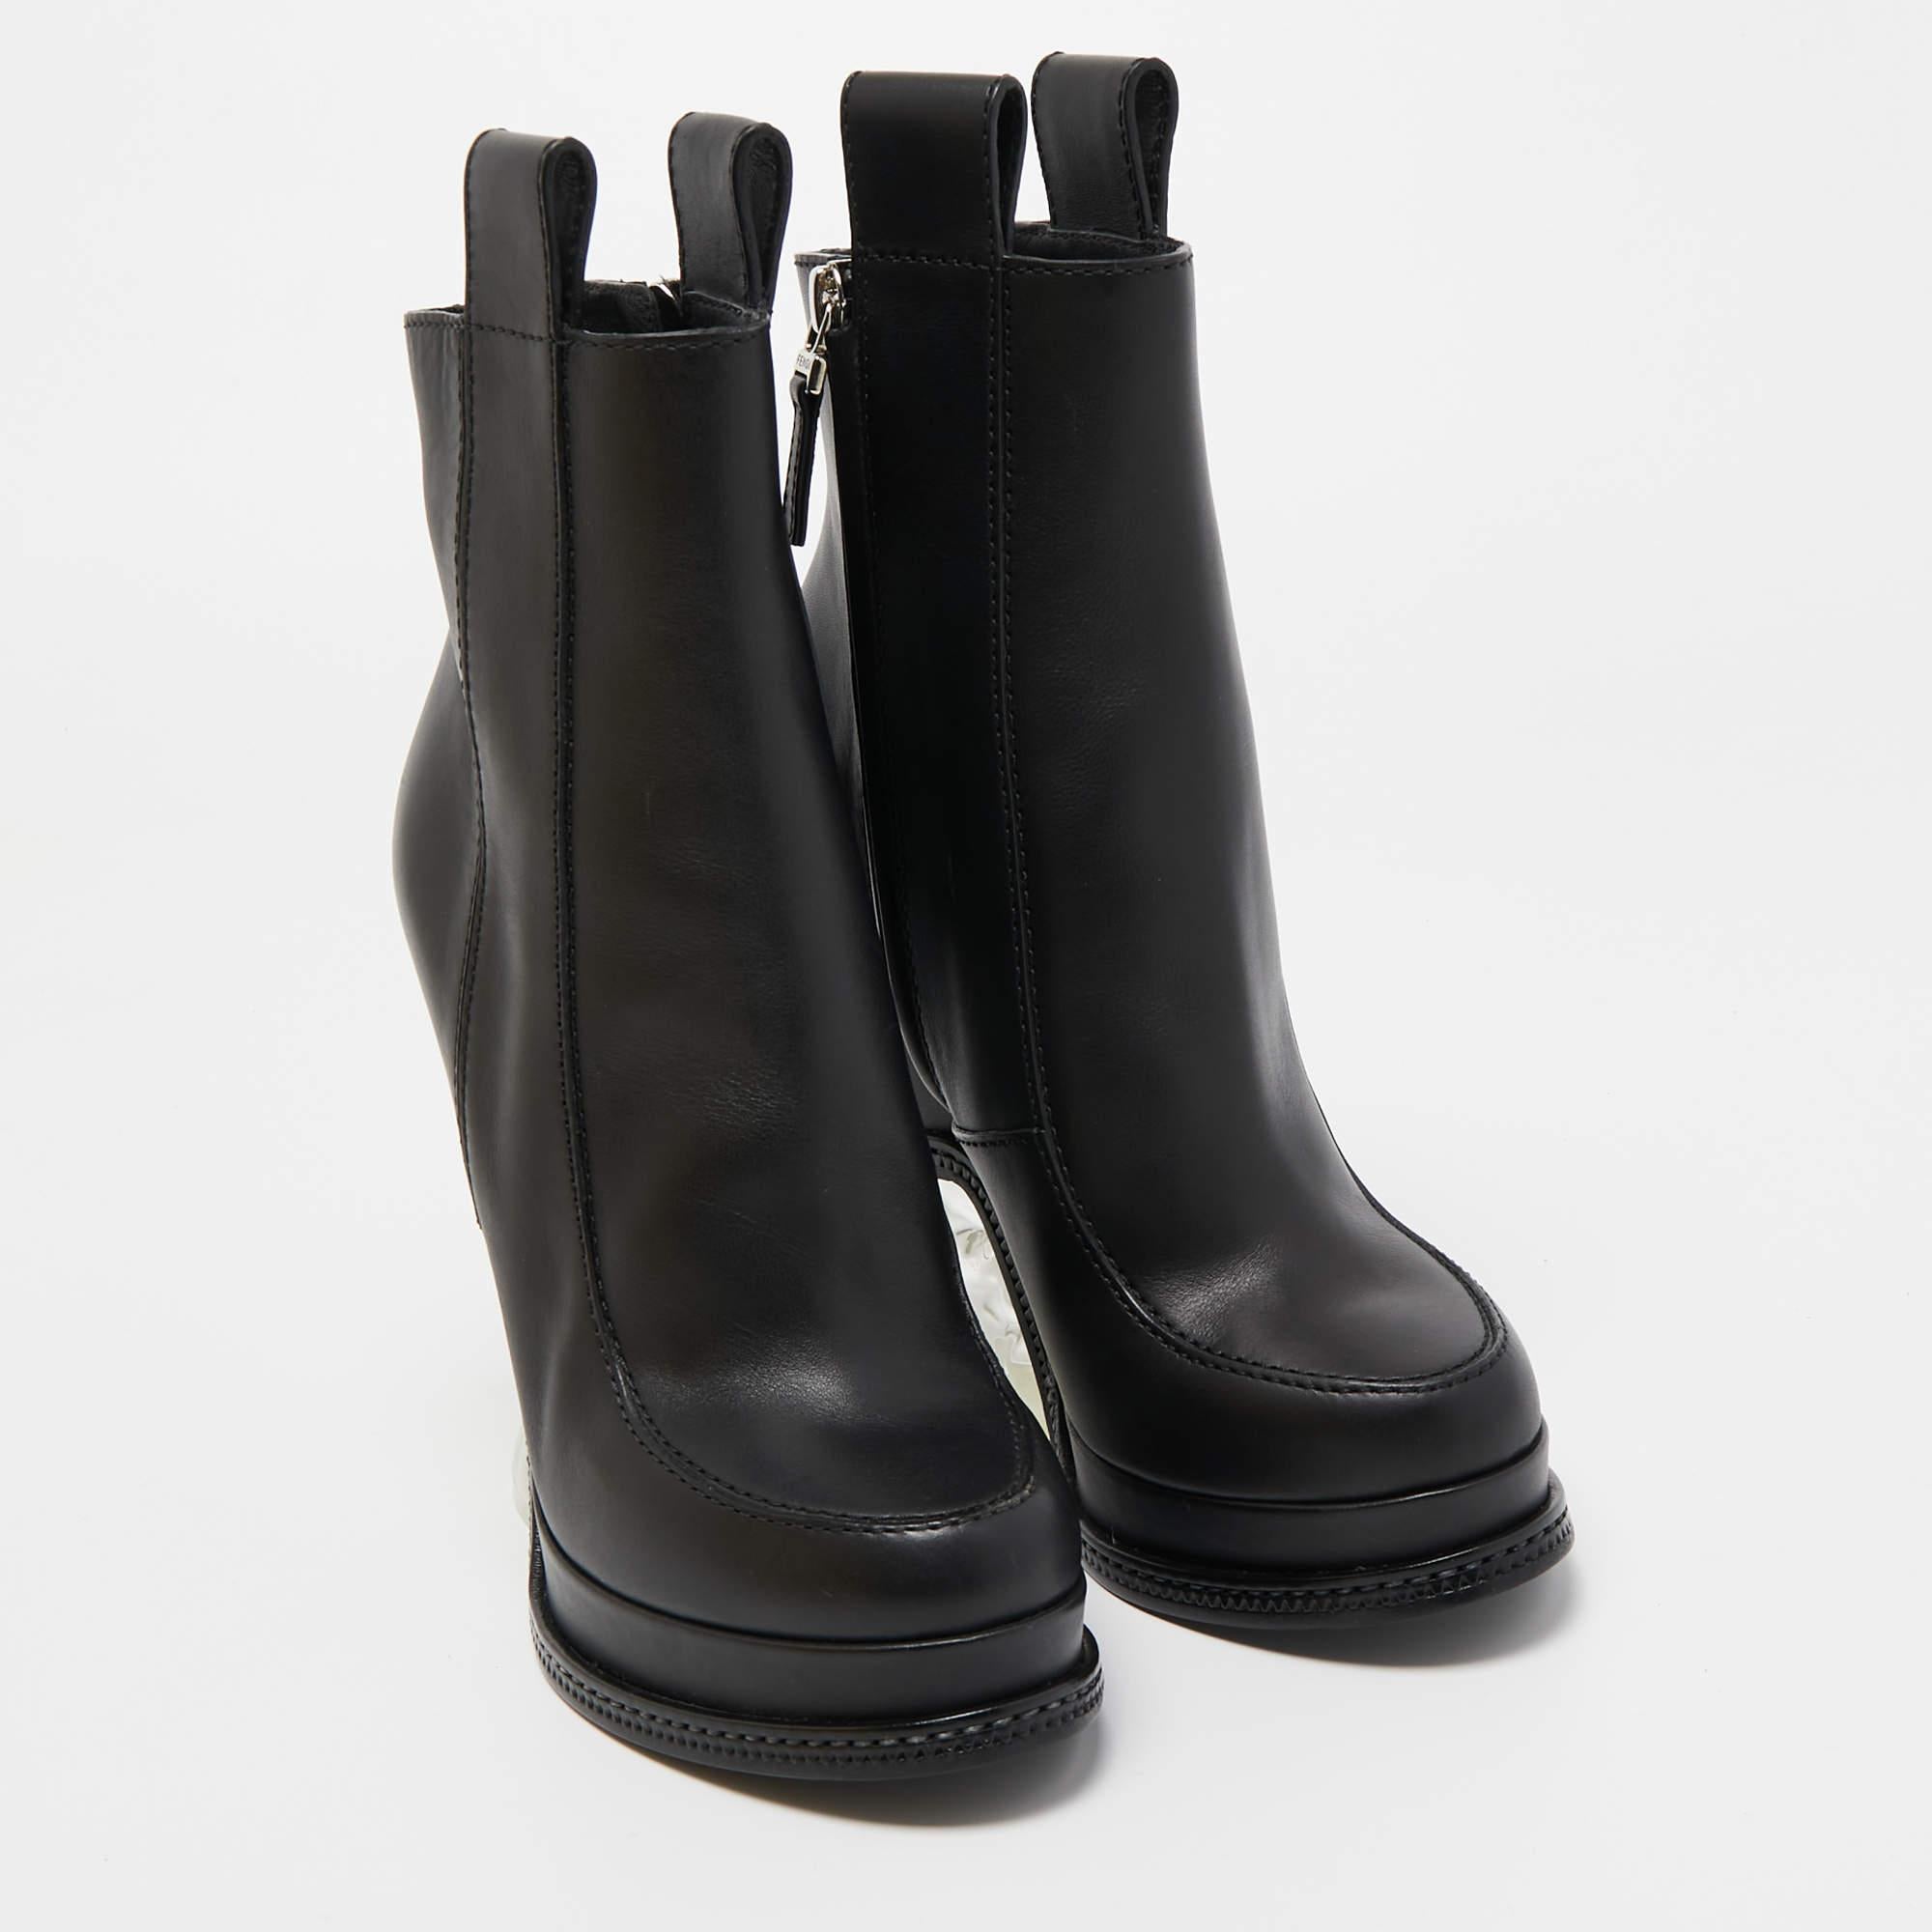 Fendi Black Leather Ice Heel Ankle Boots Size 36 In New Condition For Sale In Dubai, Al Qouz 2